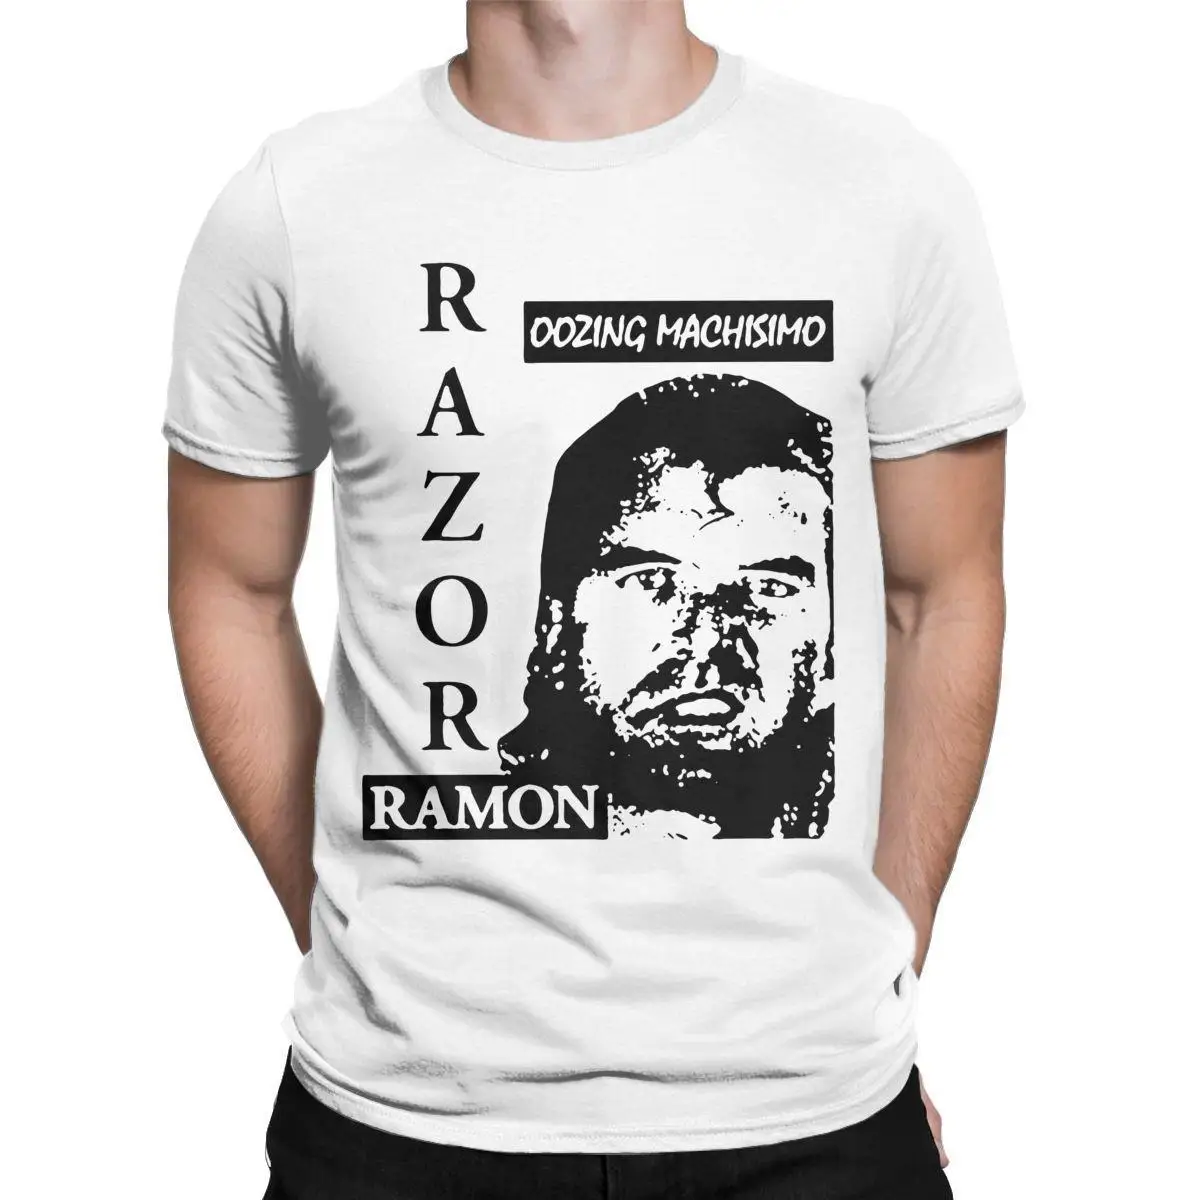 Razor Ramon Wrestling Legend T Shirt for Men 100% Cotton Vintage T-Shirt Round Collar Tees Short Sleeve Tops Gift Idea